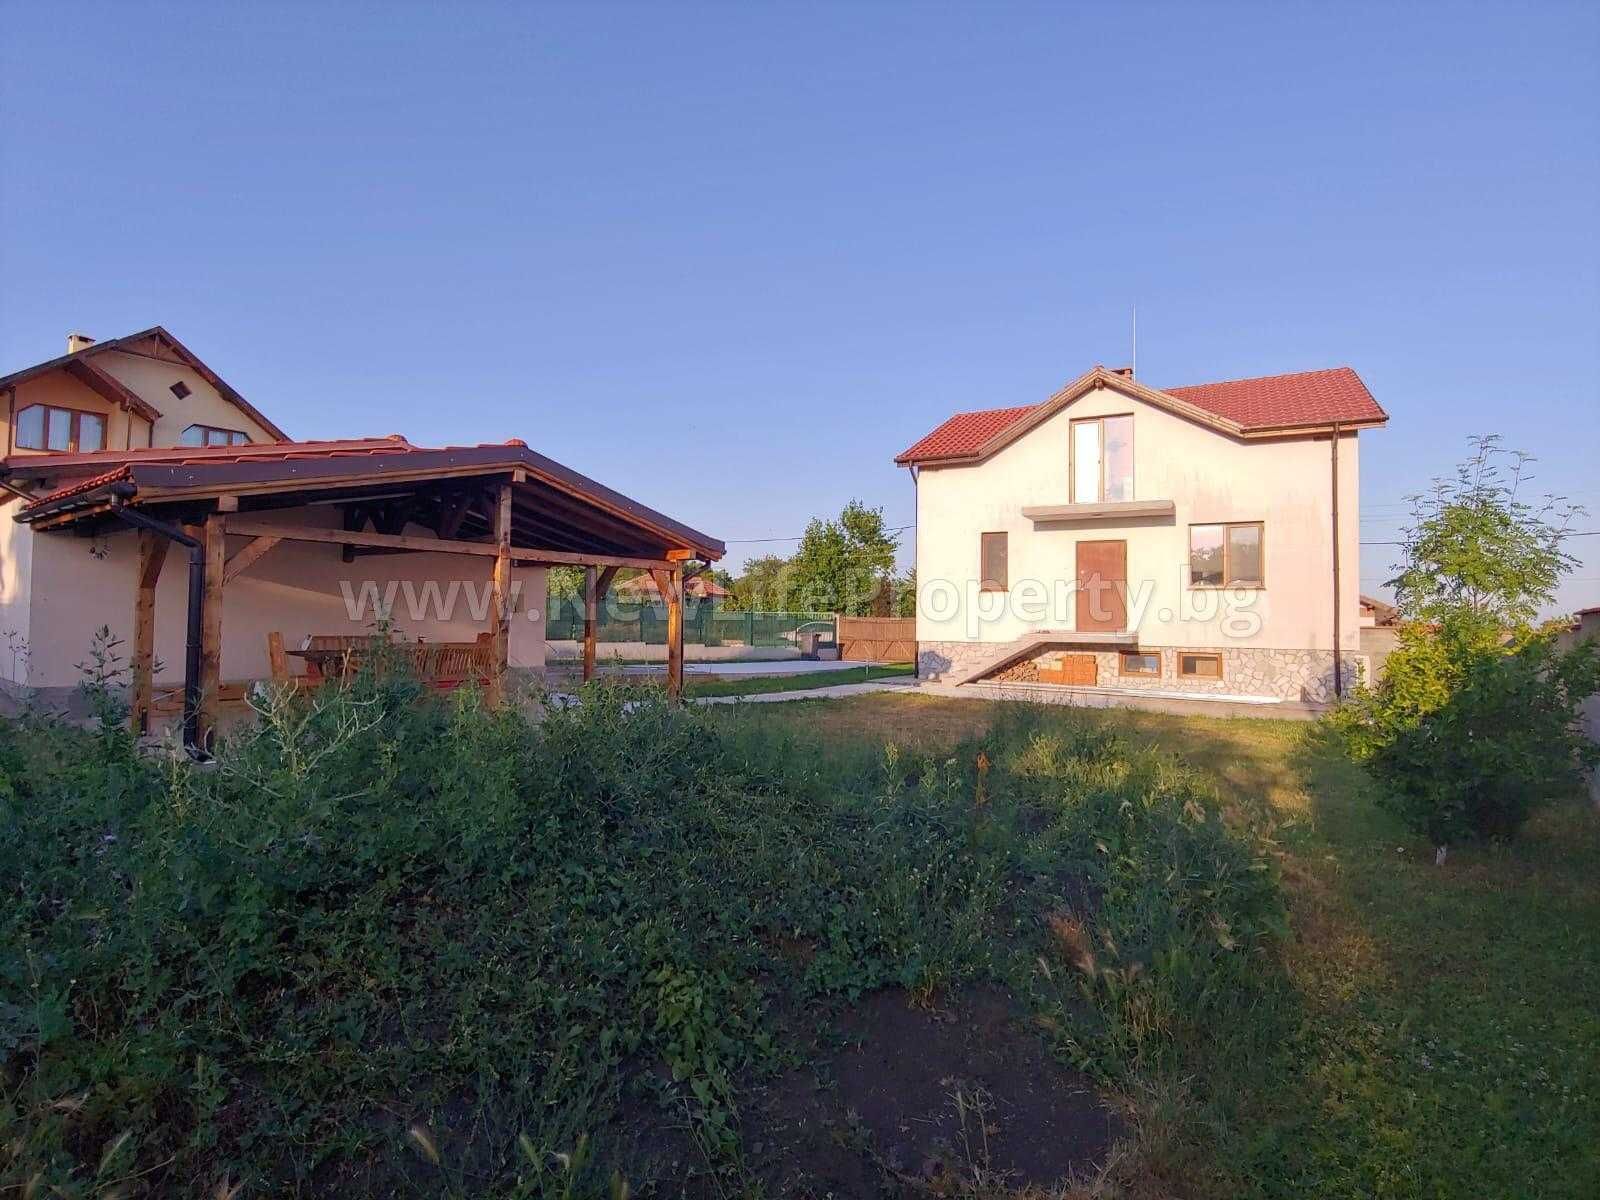 Двуетажна къща в прекрасното село Горица, област Бургас